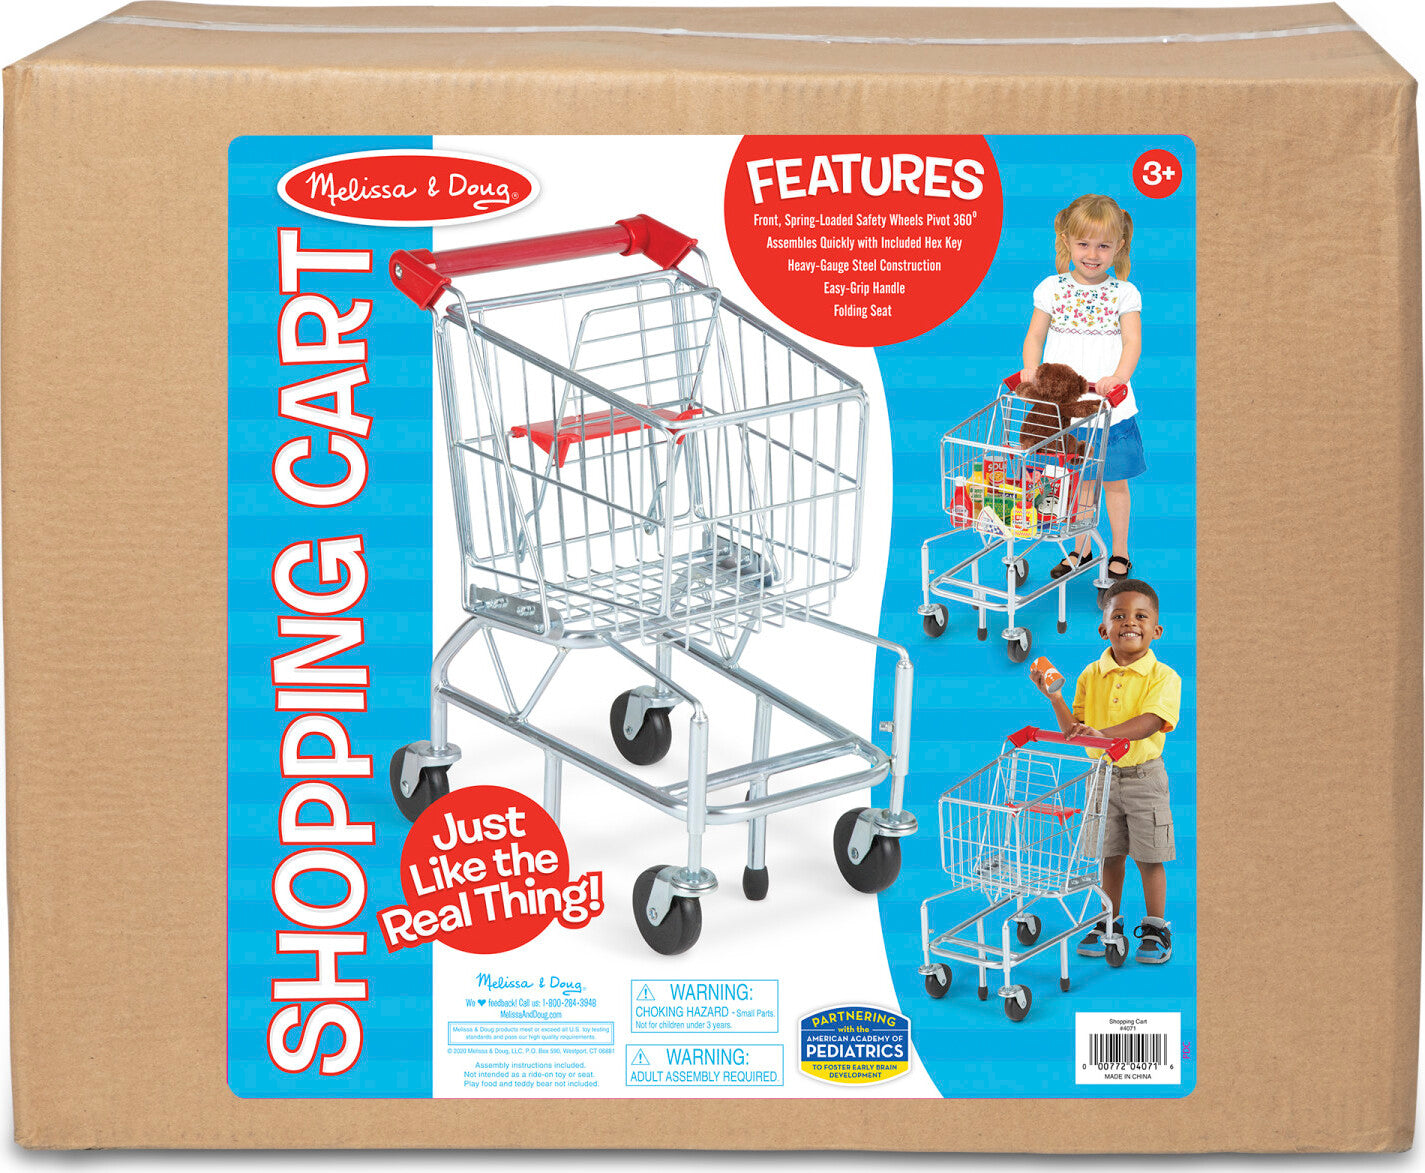 Shopping Cart Toy - Metal Grocery Wagon